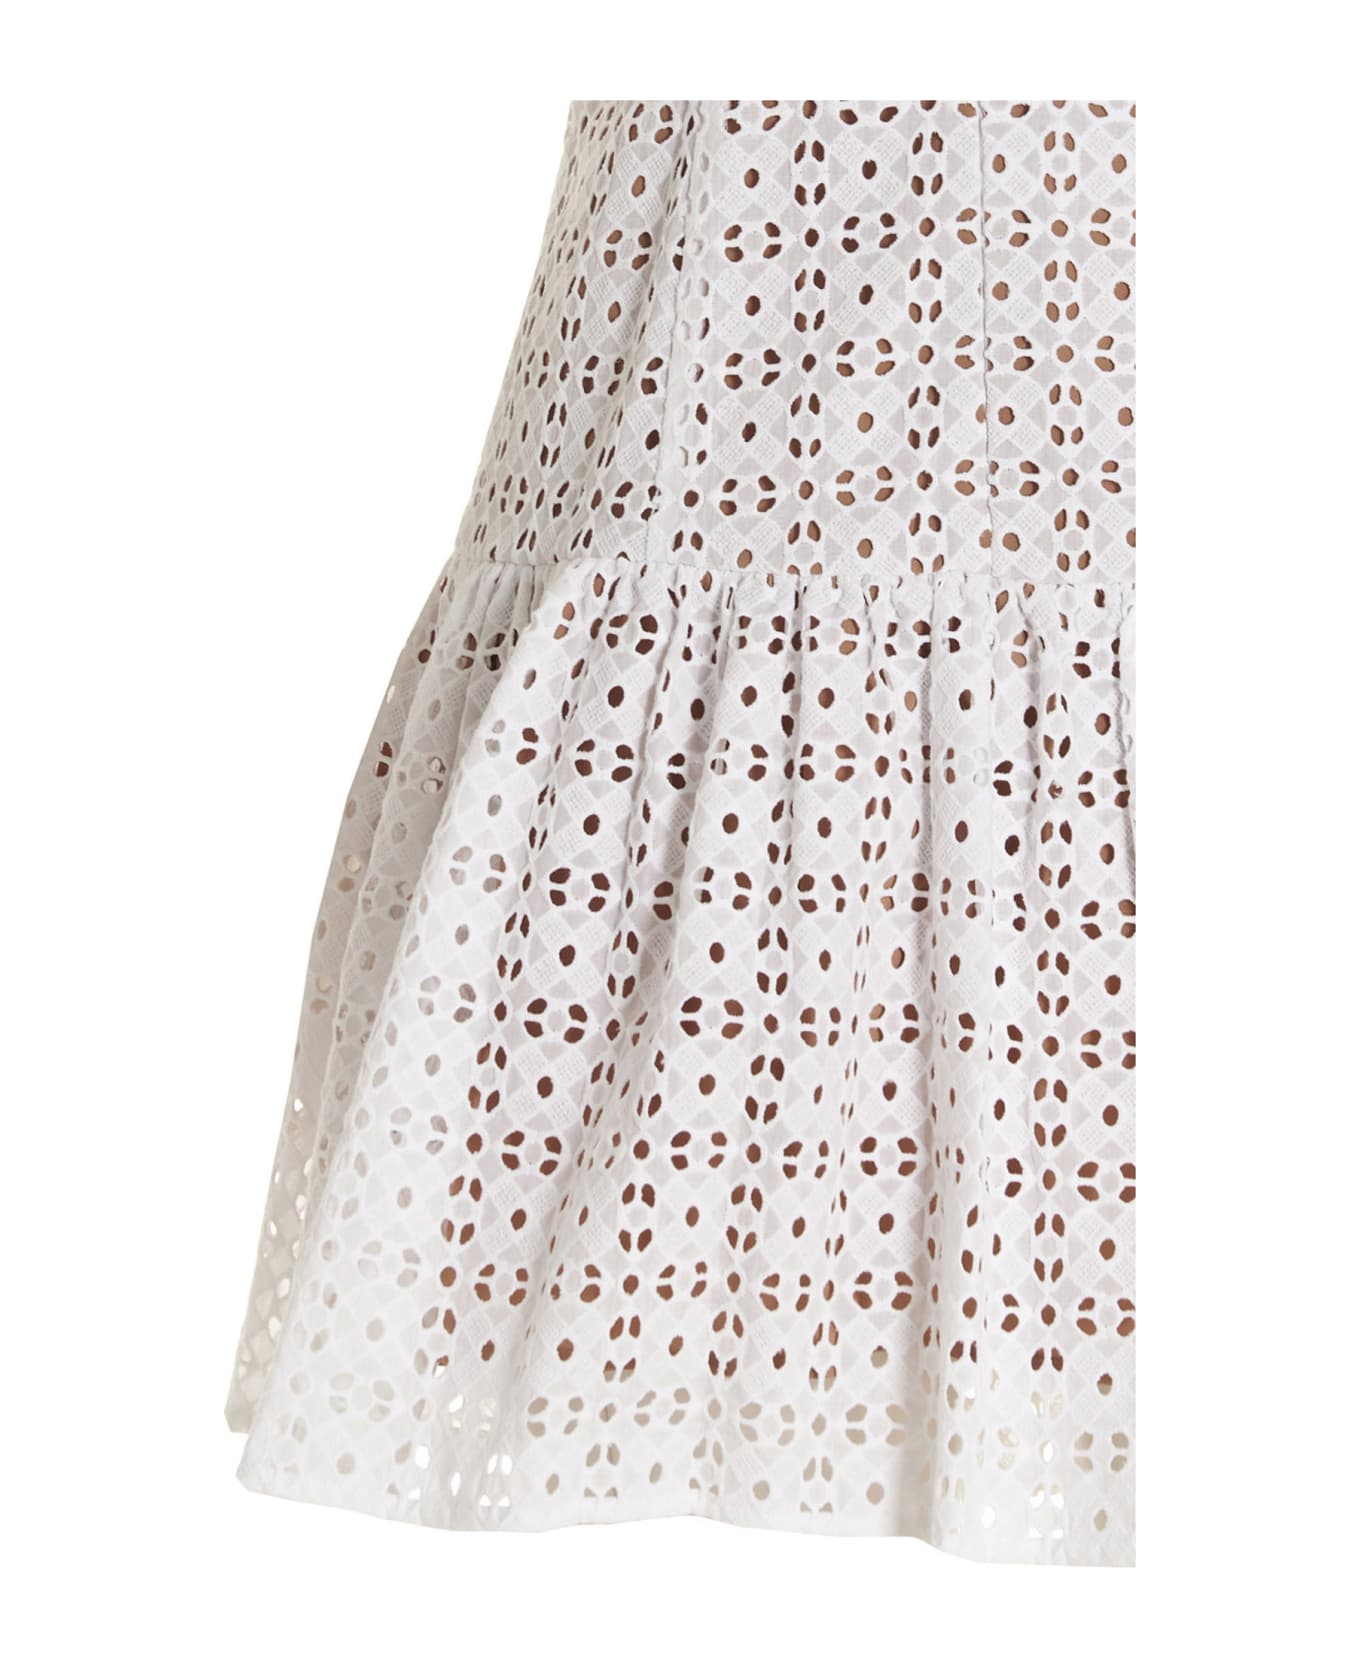 Michael Kors Collection St Gallen Dress - White